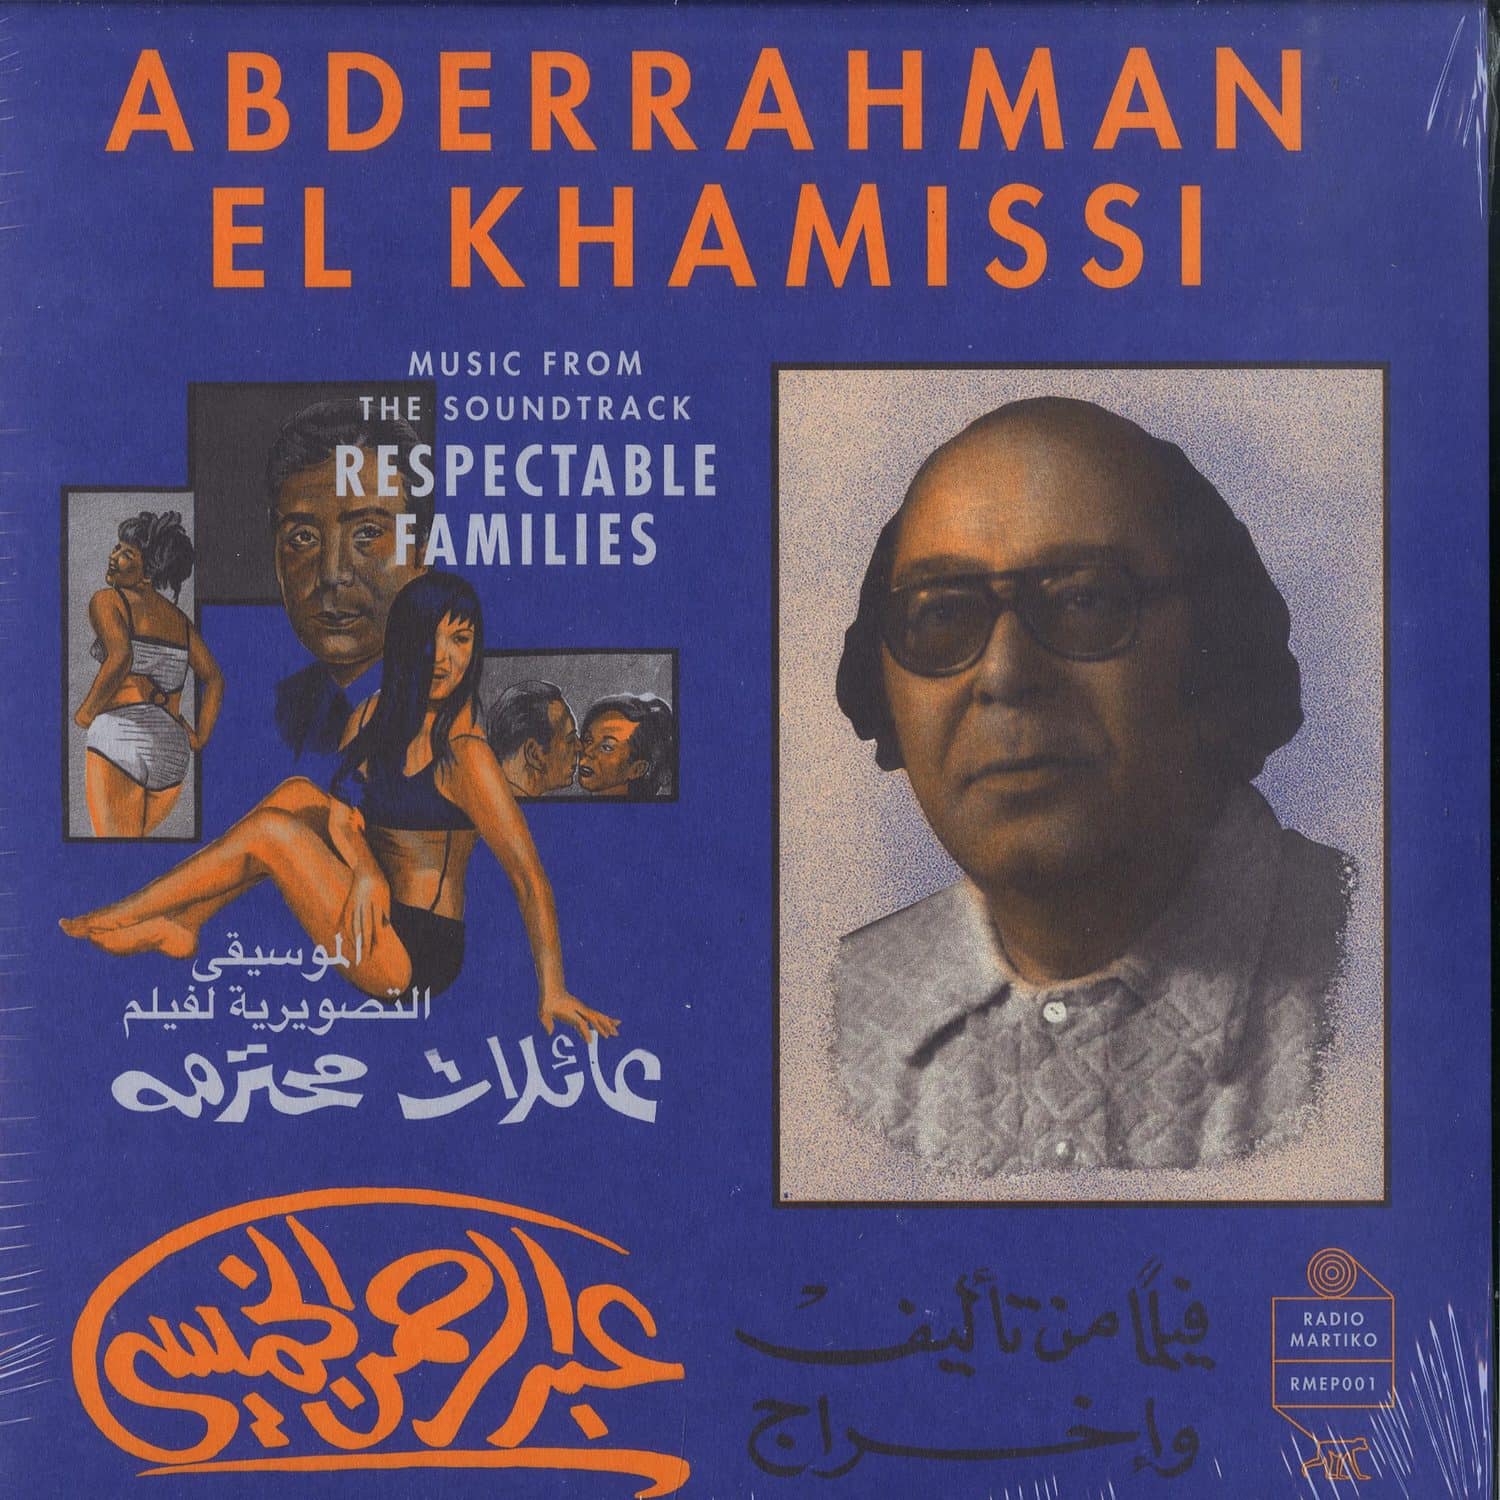 Abderrahman El Khamissi - MUSIC FROM THE SOUNDTRACK RESPECTABLE FAMILIES 